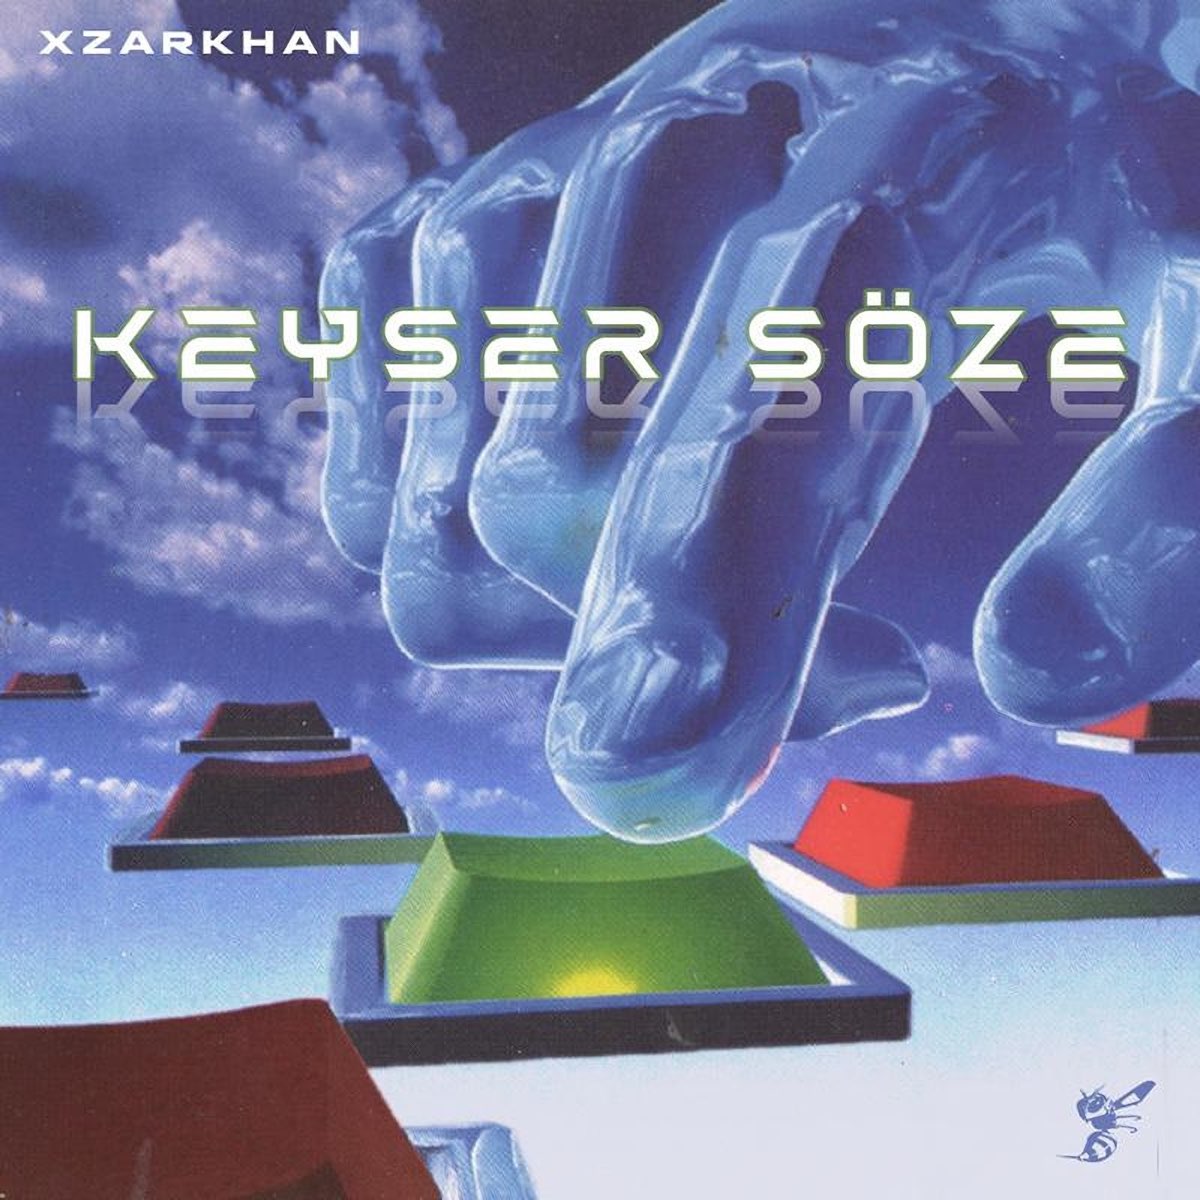 Keyser Soze: albums, songs, playlists